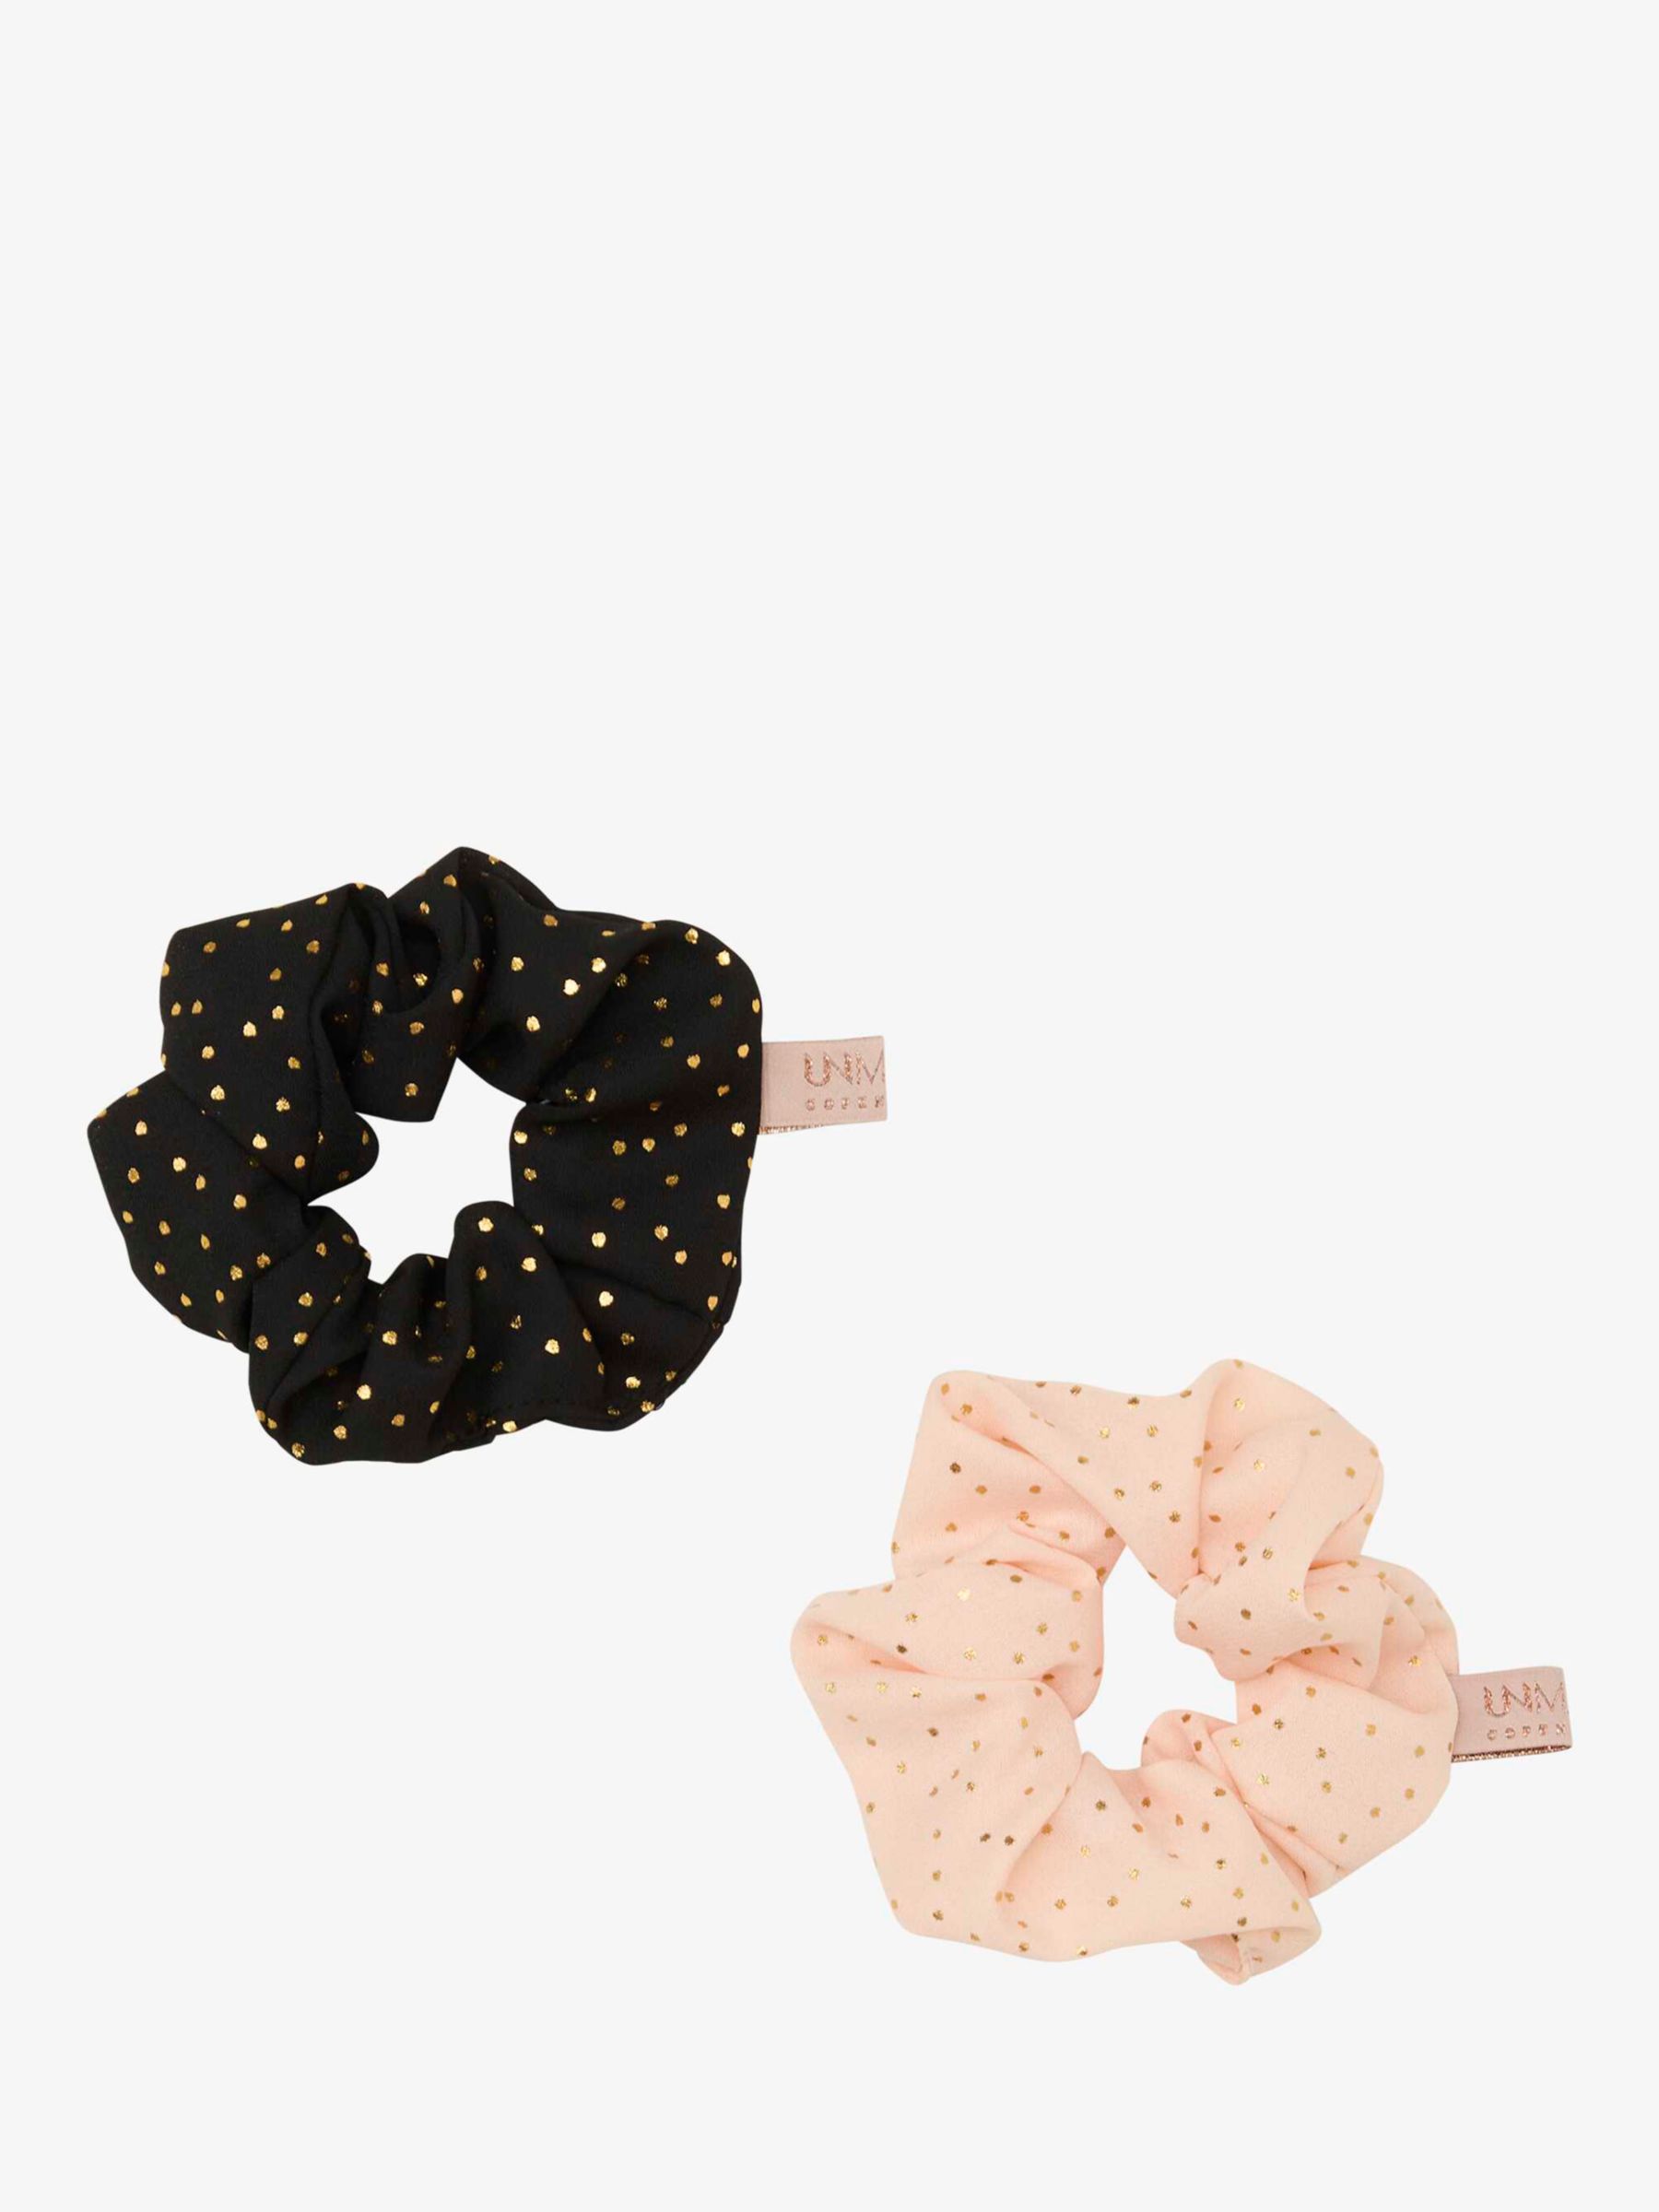 Unmade Copenhagen Vicca Spot Print Scrunchies, Pack of 2, Black/Rose, One Size